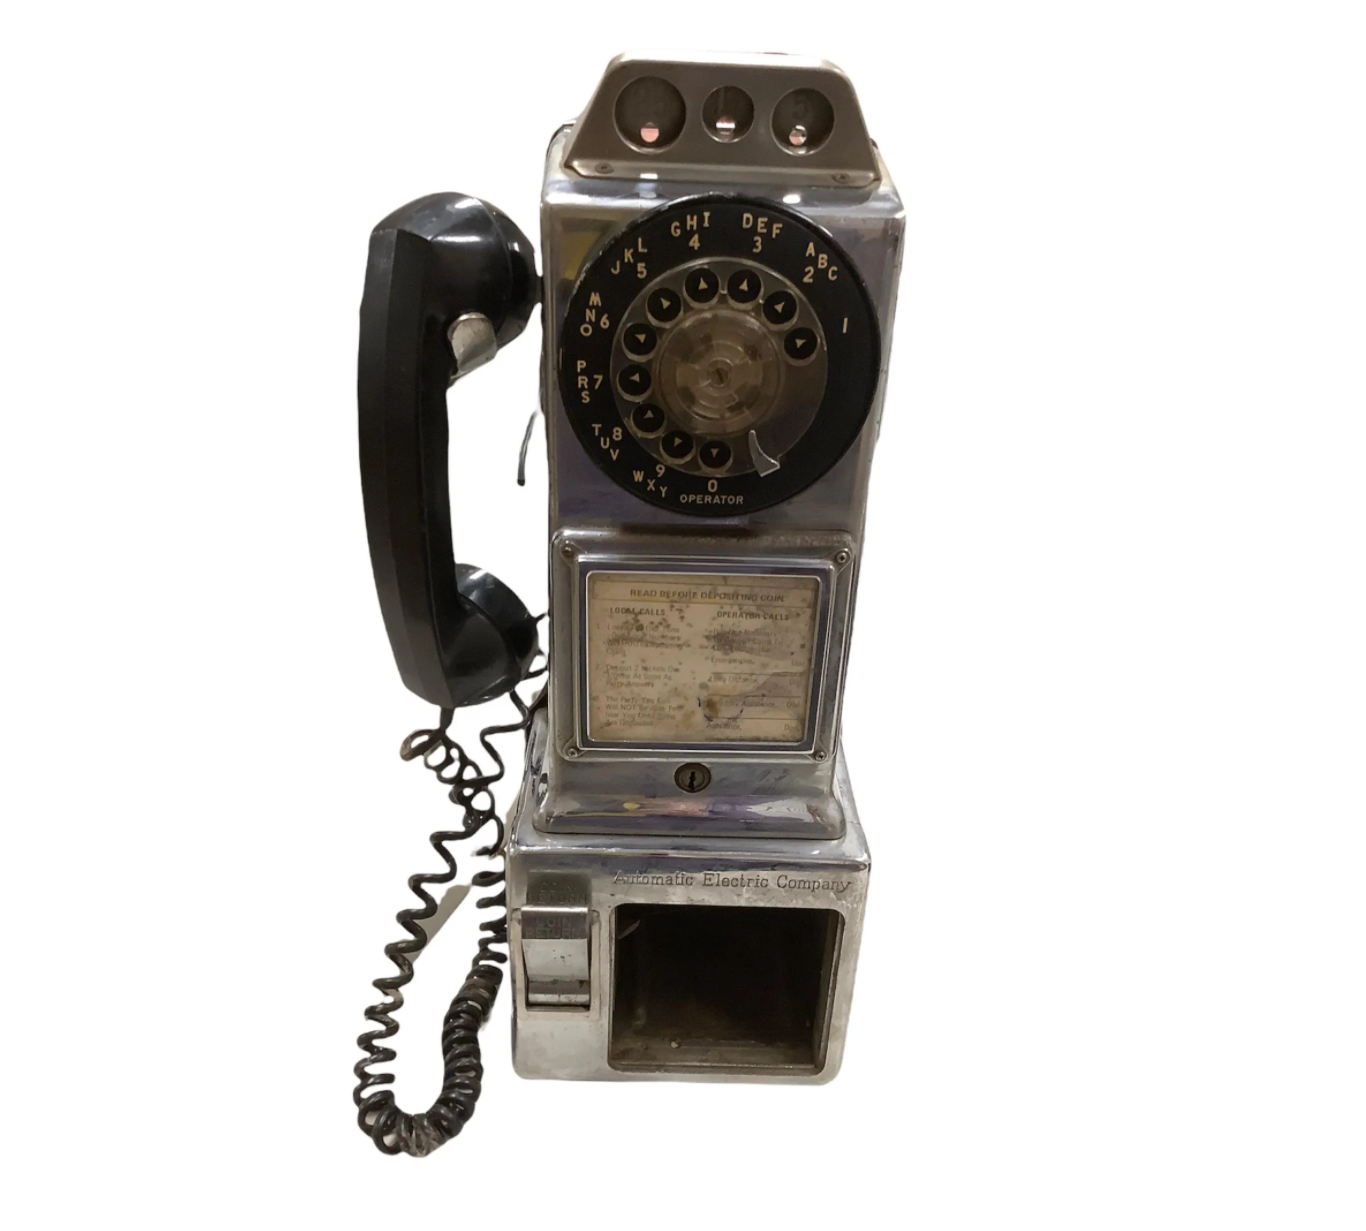 1950's Pay Phone